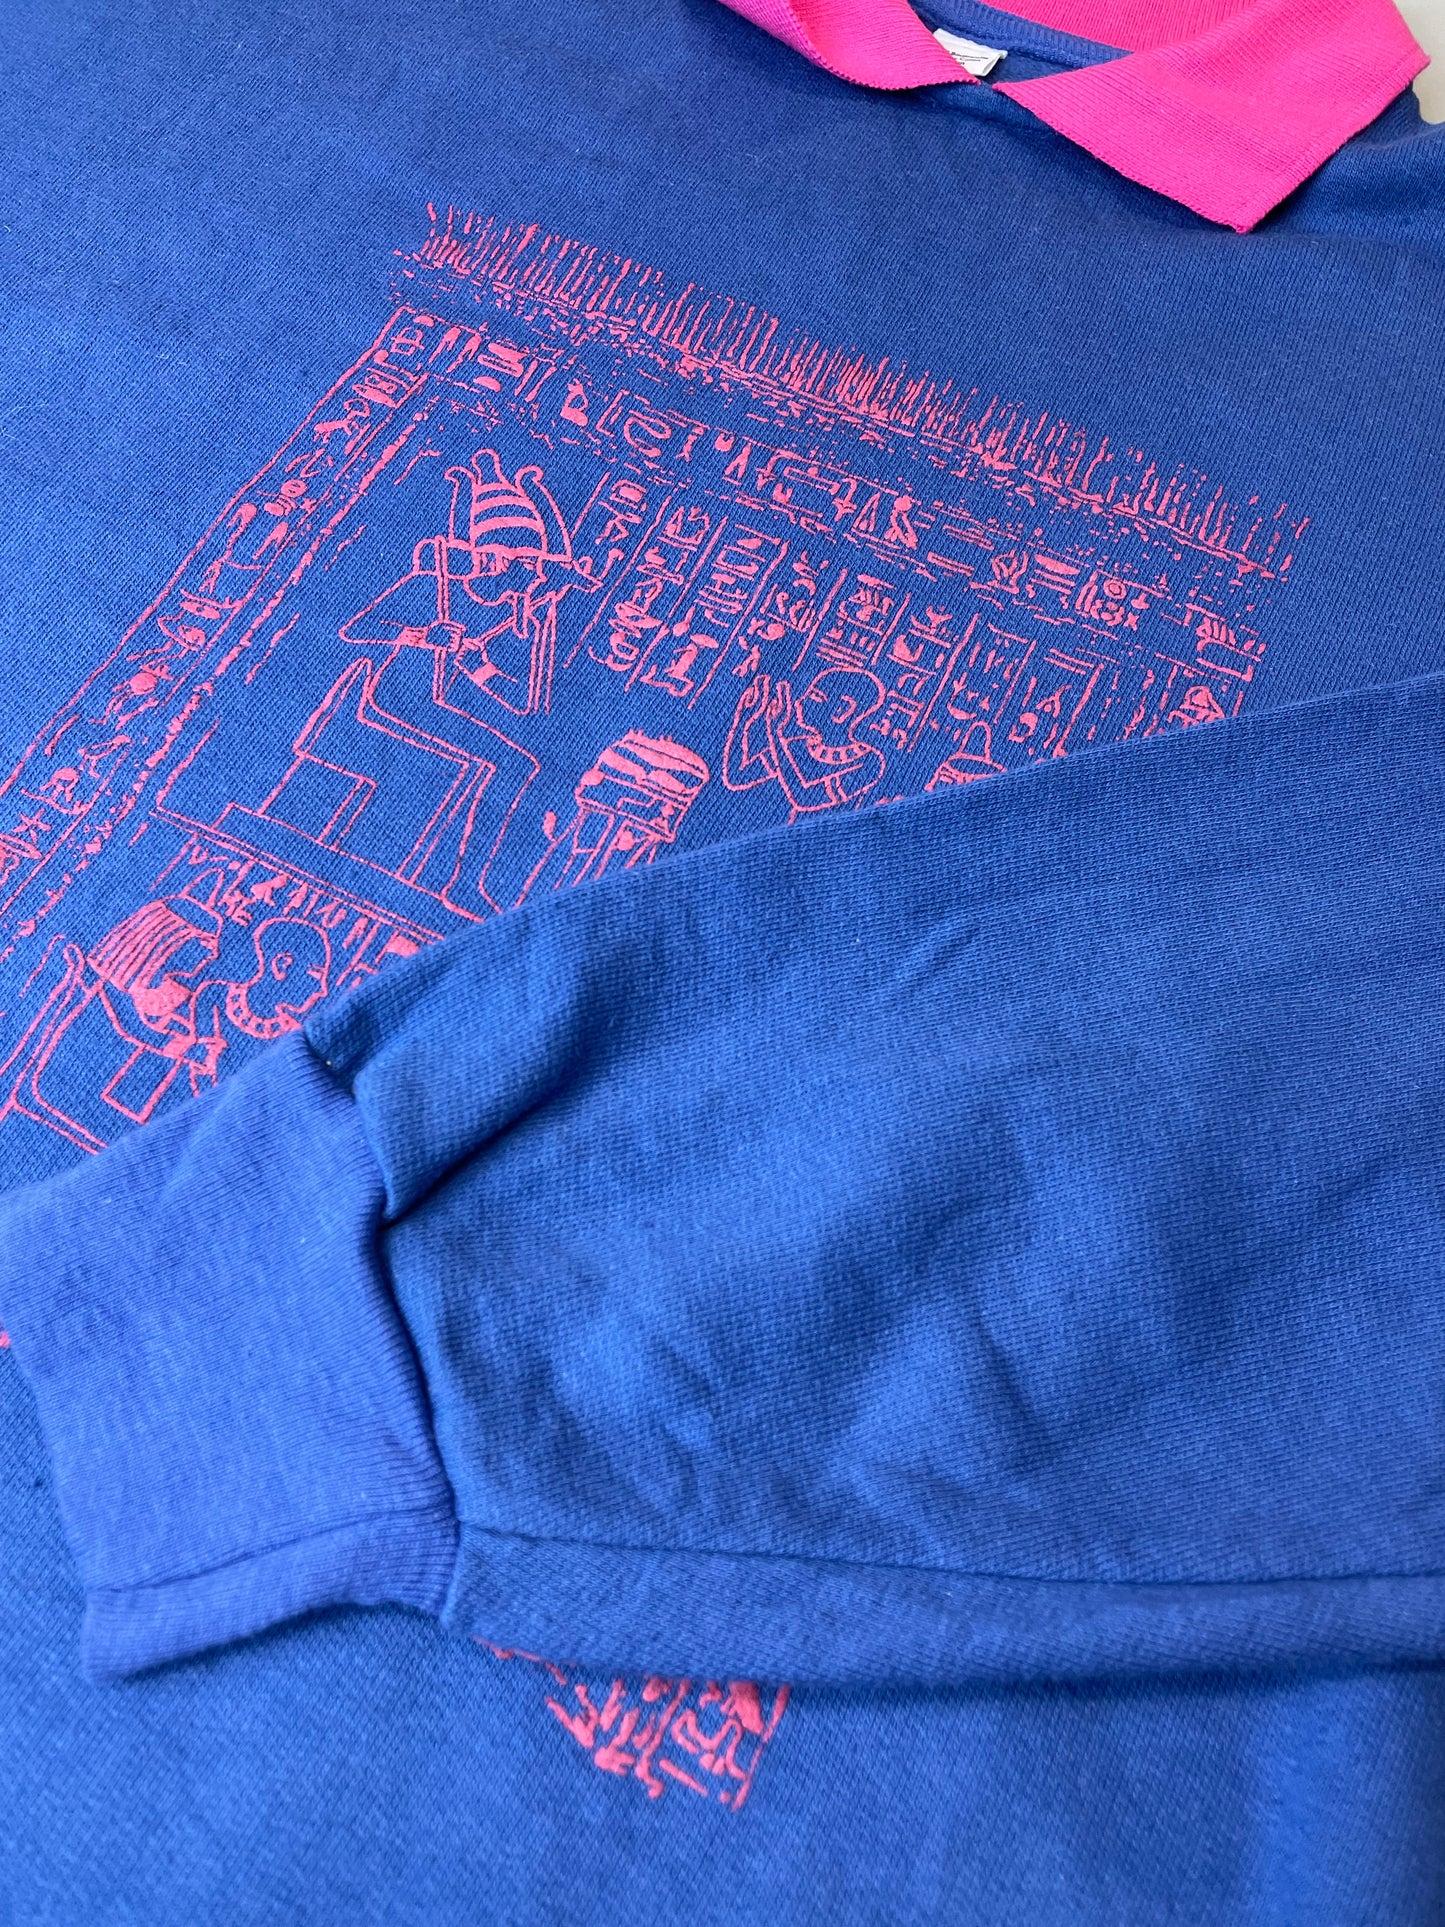 80s Unbranded Sweatshirt Blue Pink